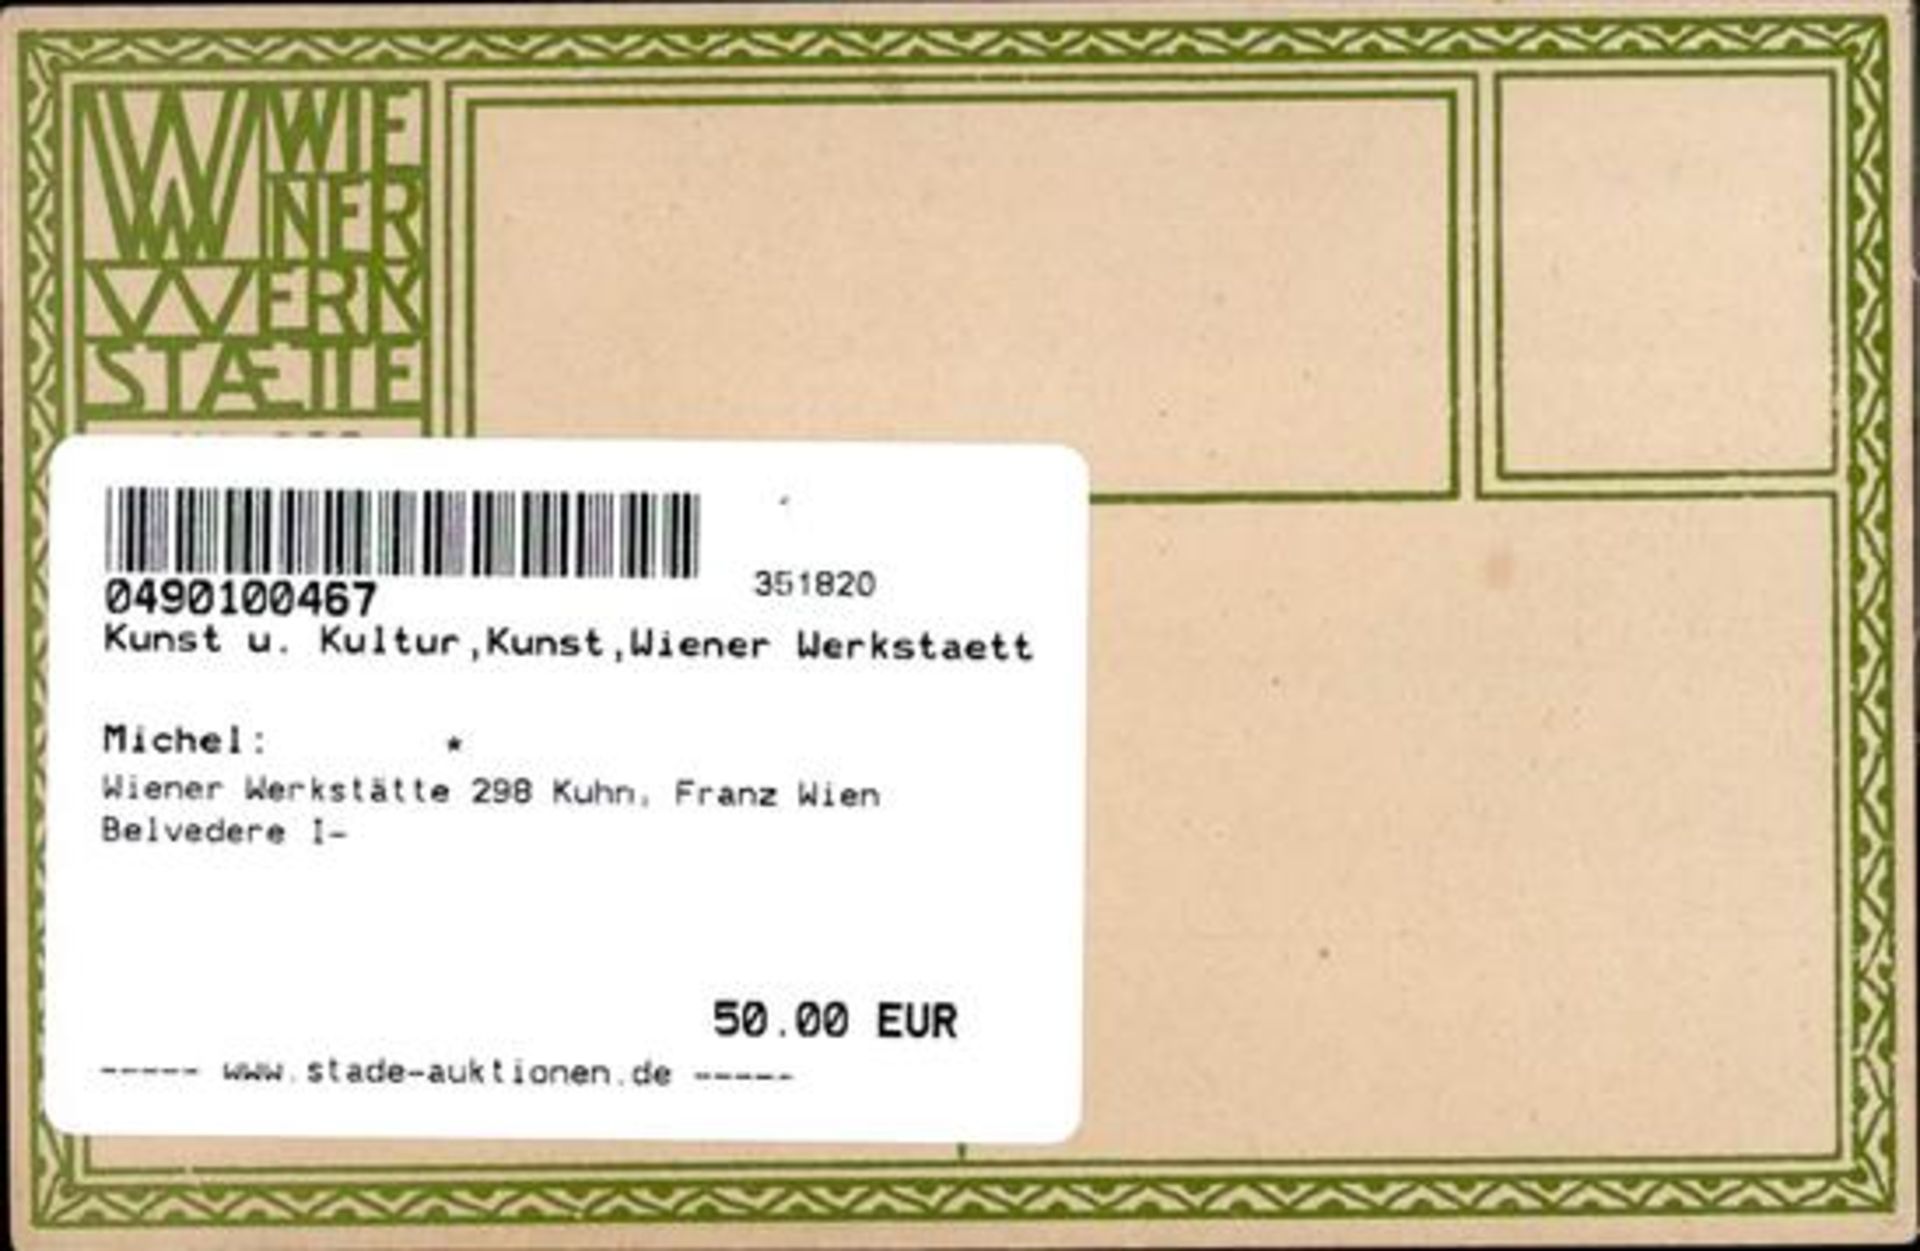 Wiener Werkstätte 298 Kuhn, Franz Wien Belvedere I- - Image 2 of 2